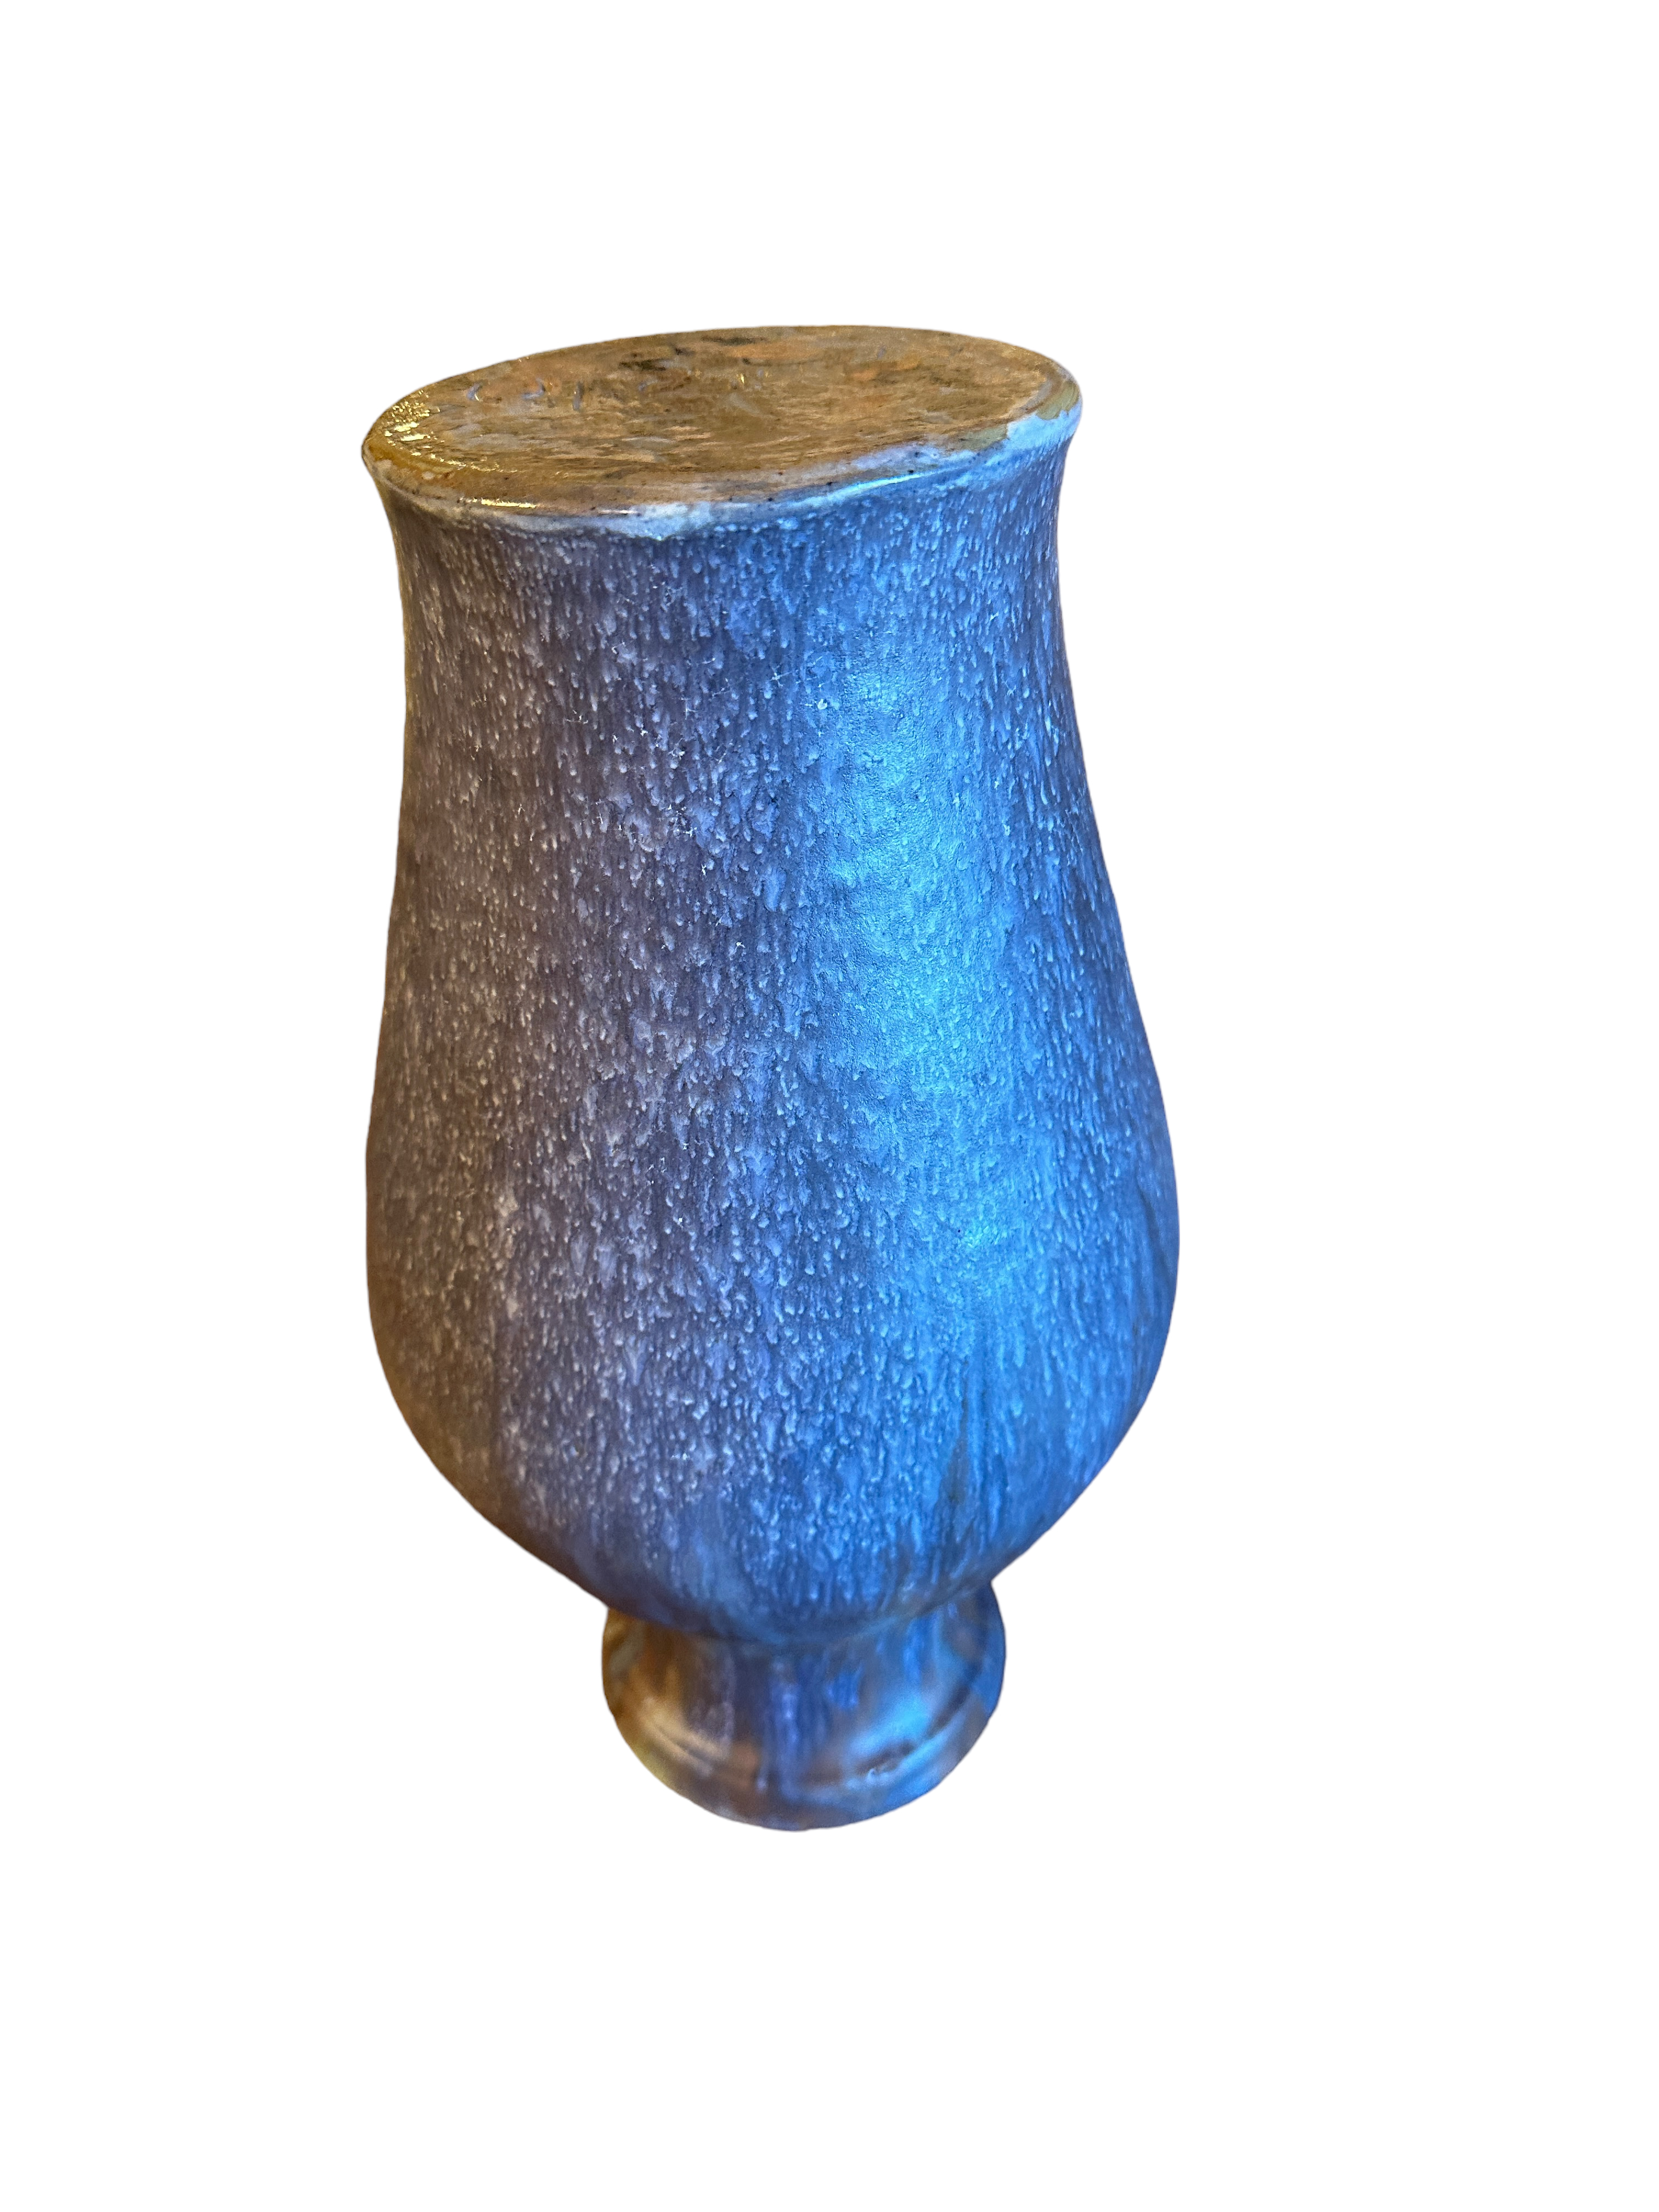 Large Upchurch Studio Pottery Vase - 33cm tall. - Image 4 of 5